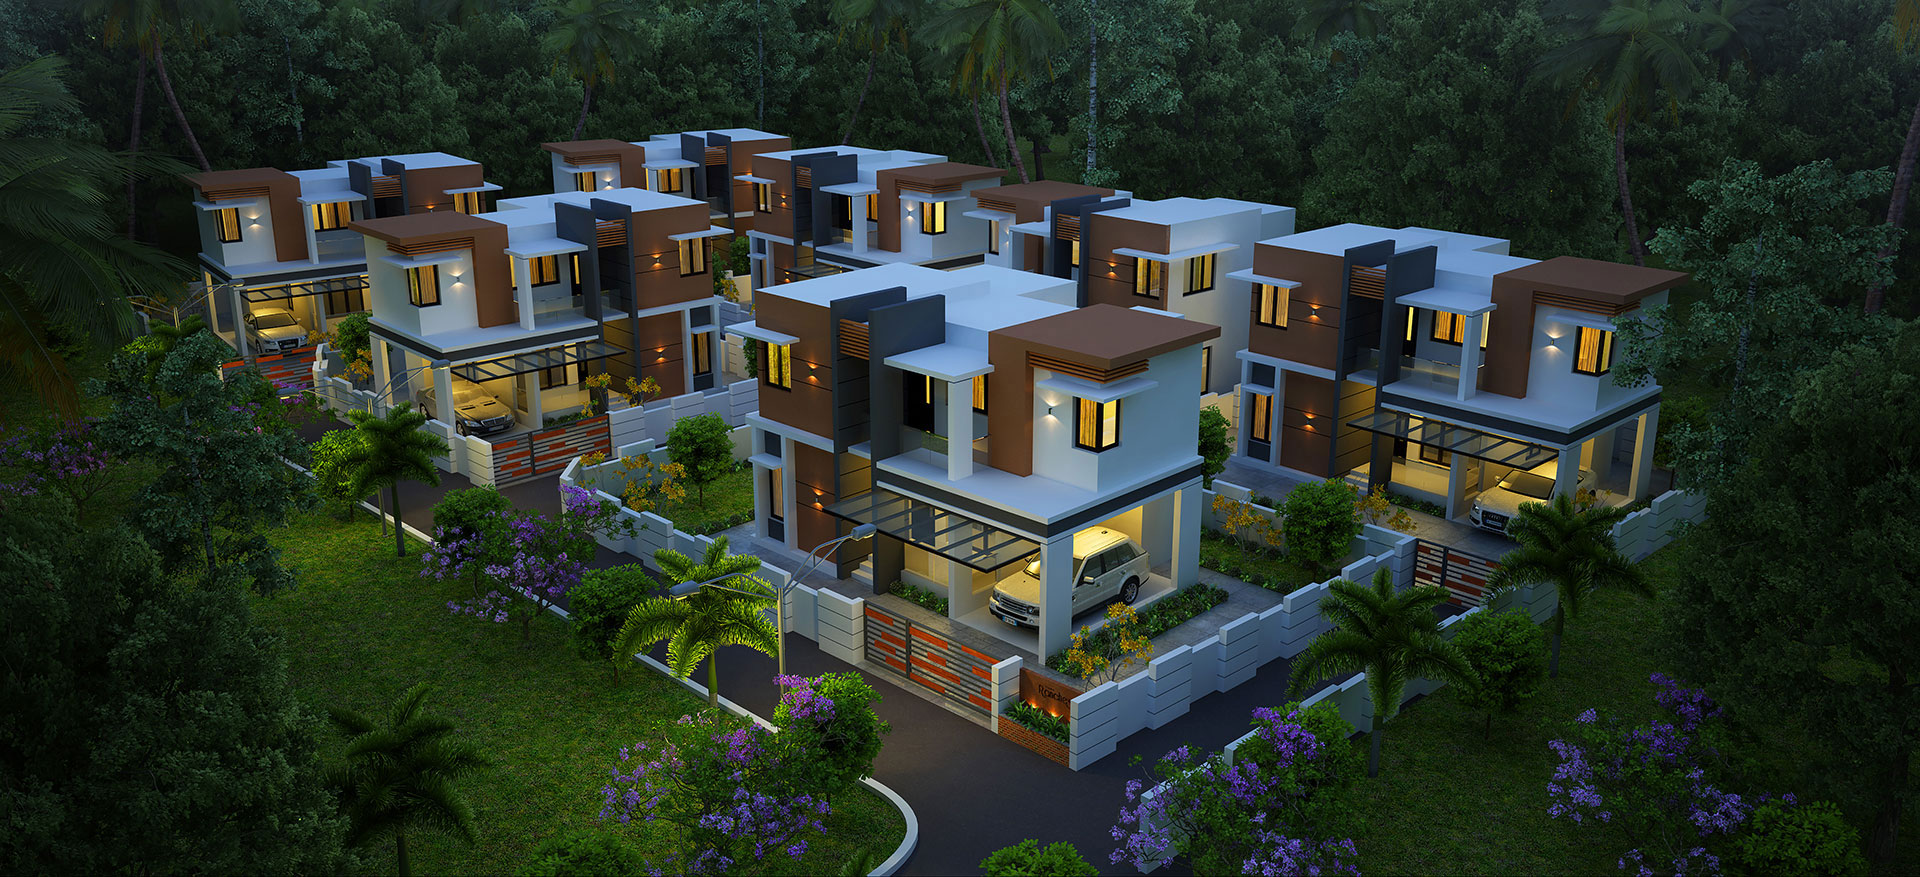 Villa project in malapuram